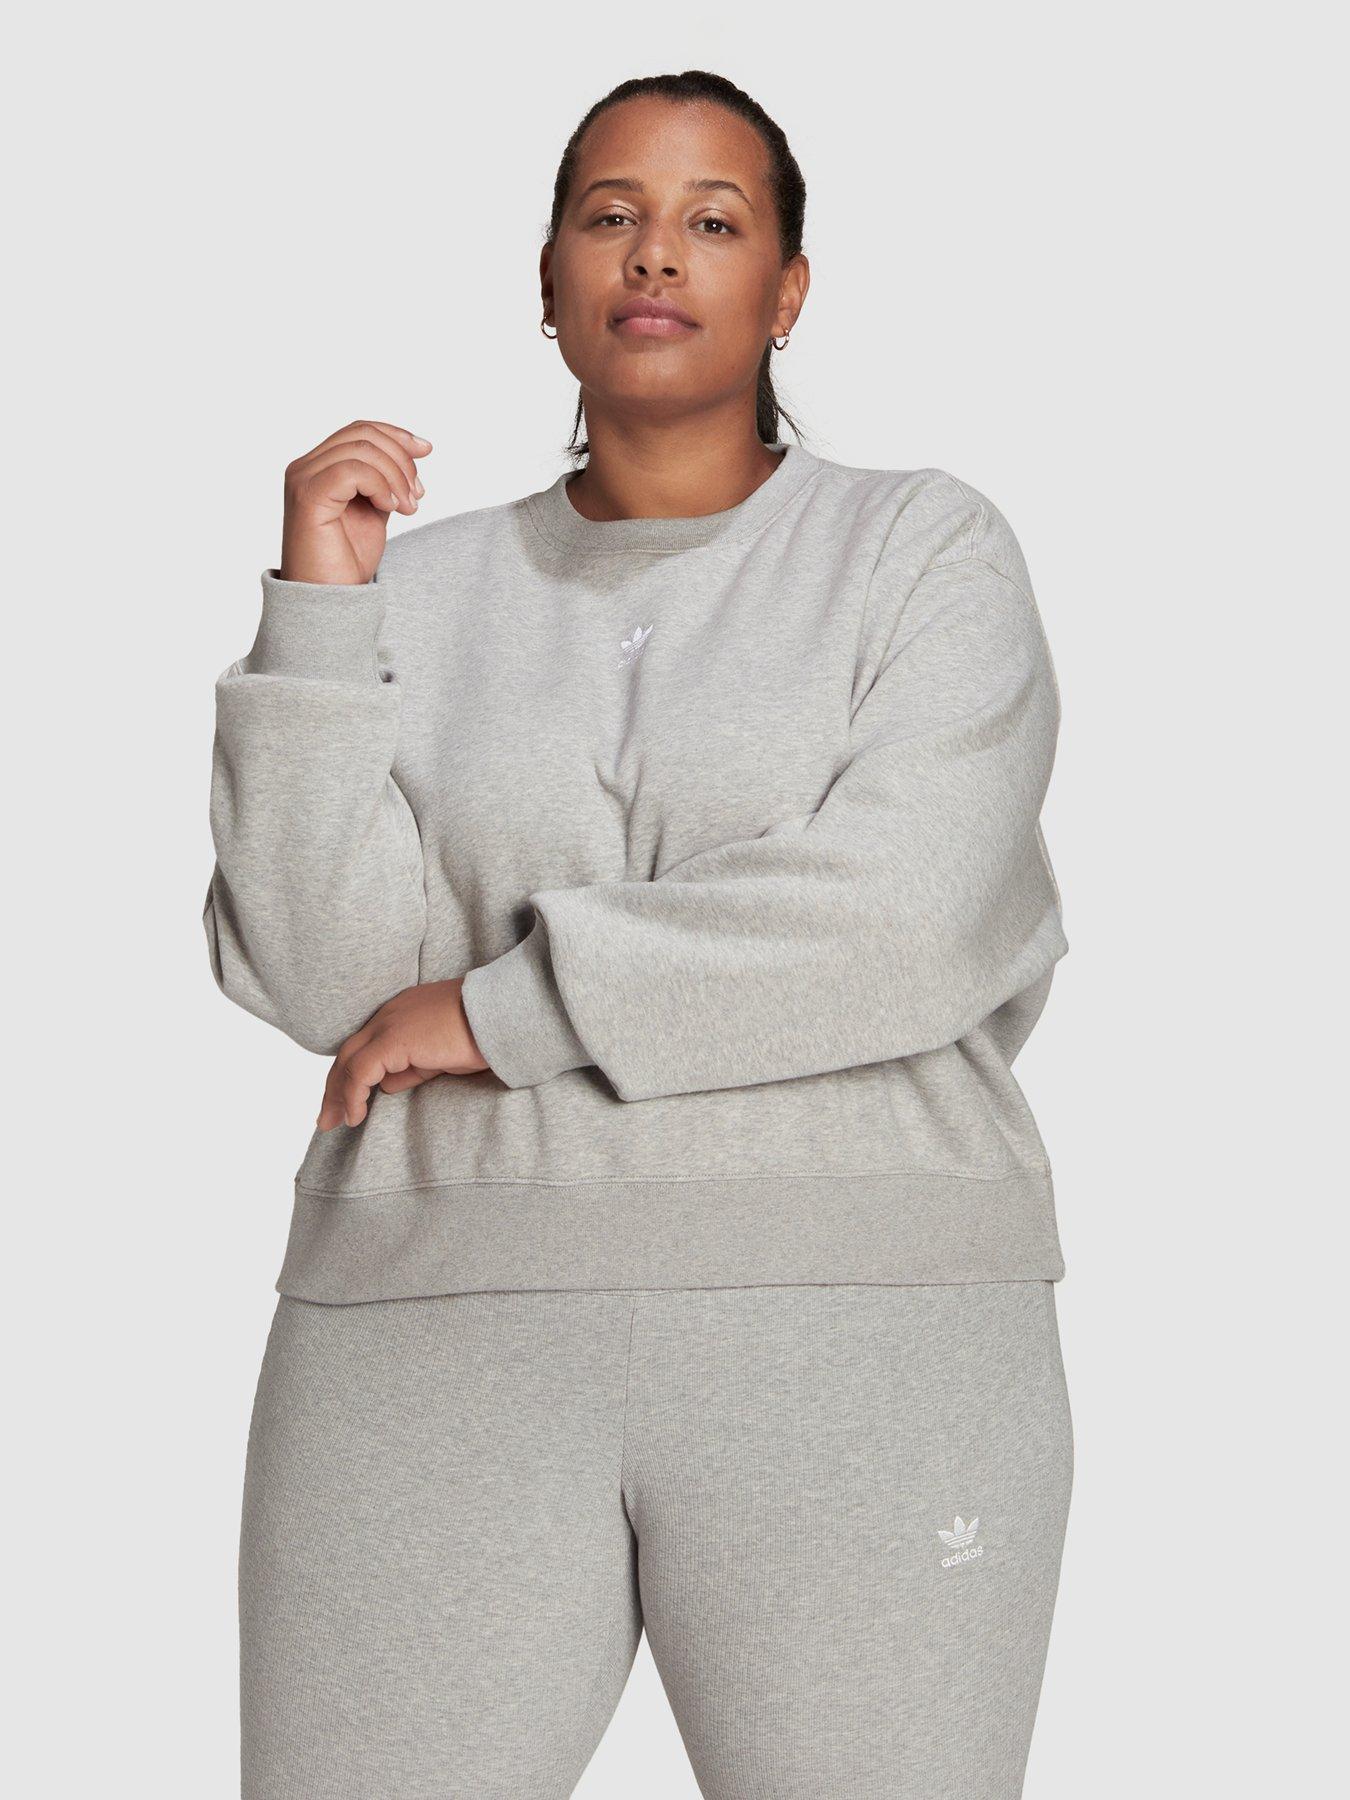  Sweatshirt (Plus Size) - Medium Grey Heather